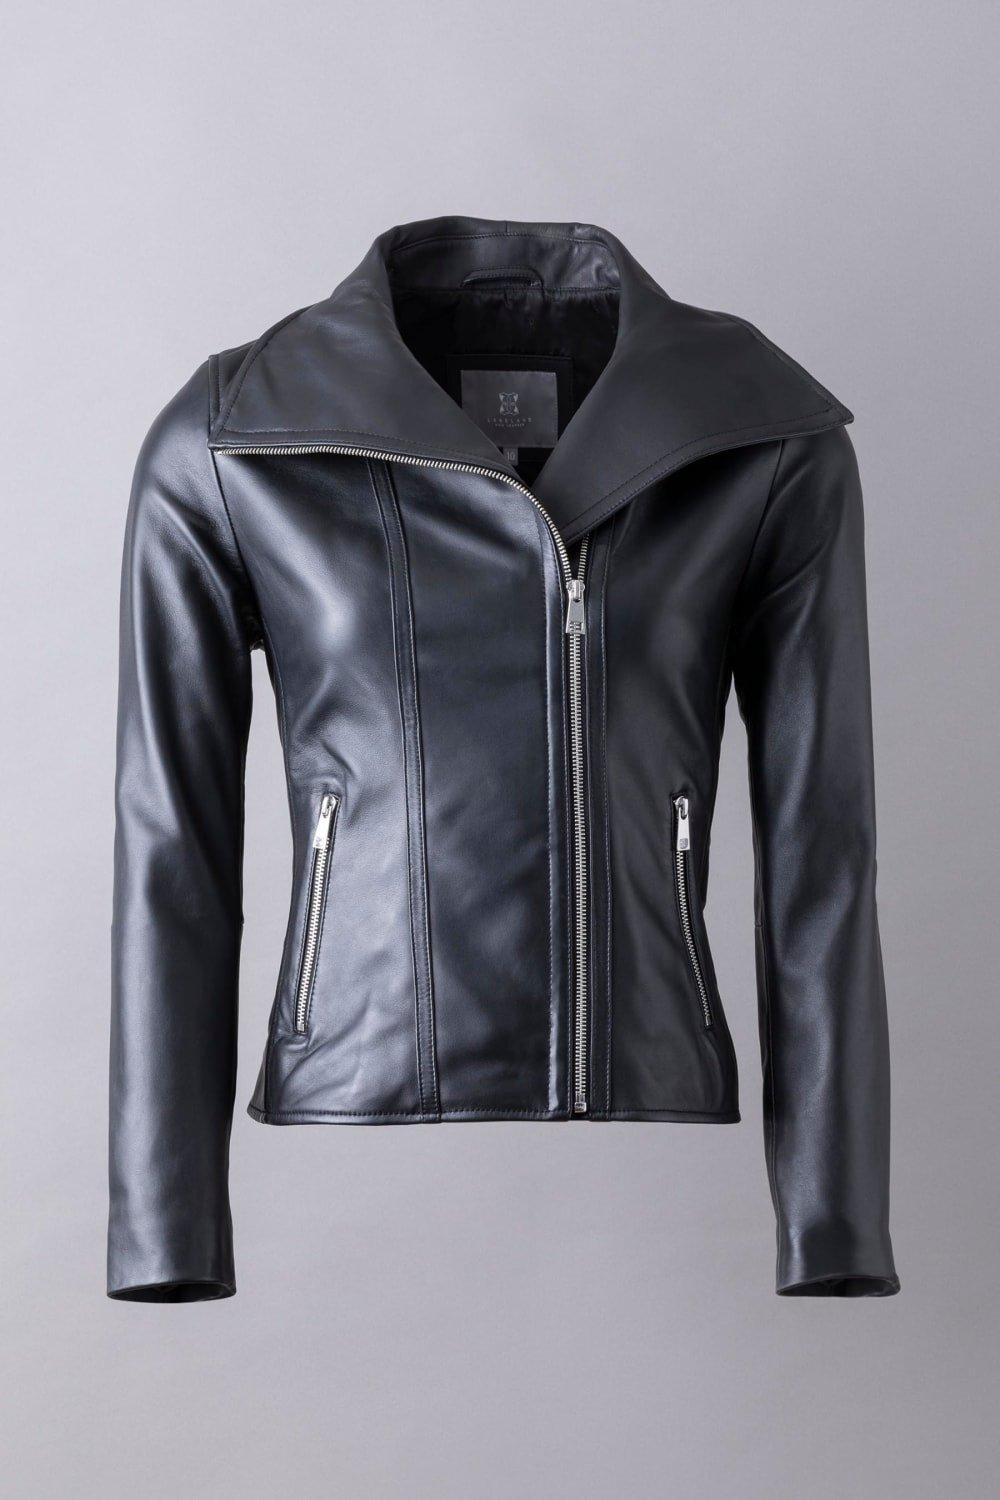 Lakeland Leather Women's 'Moresby' Leather Jacket|Size: 16|black